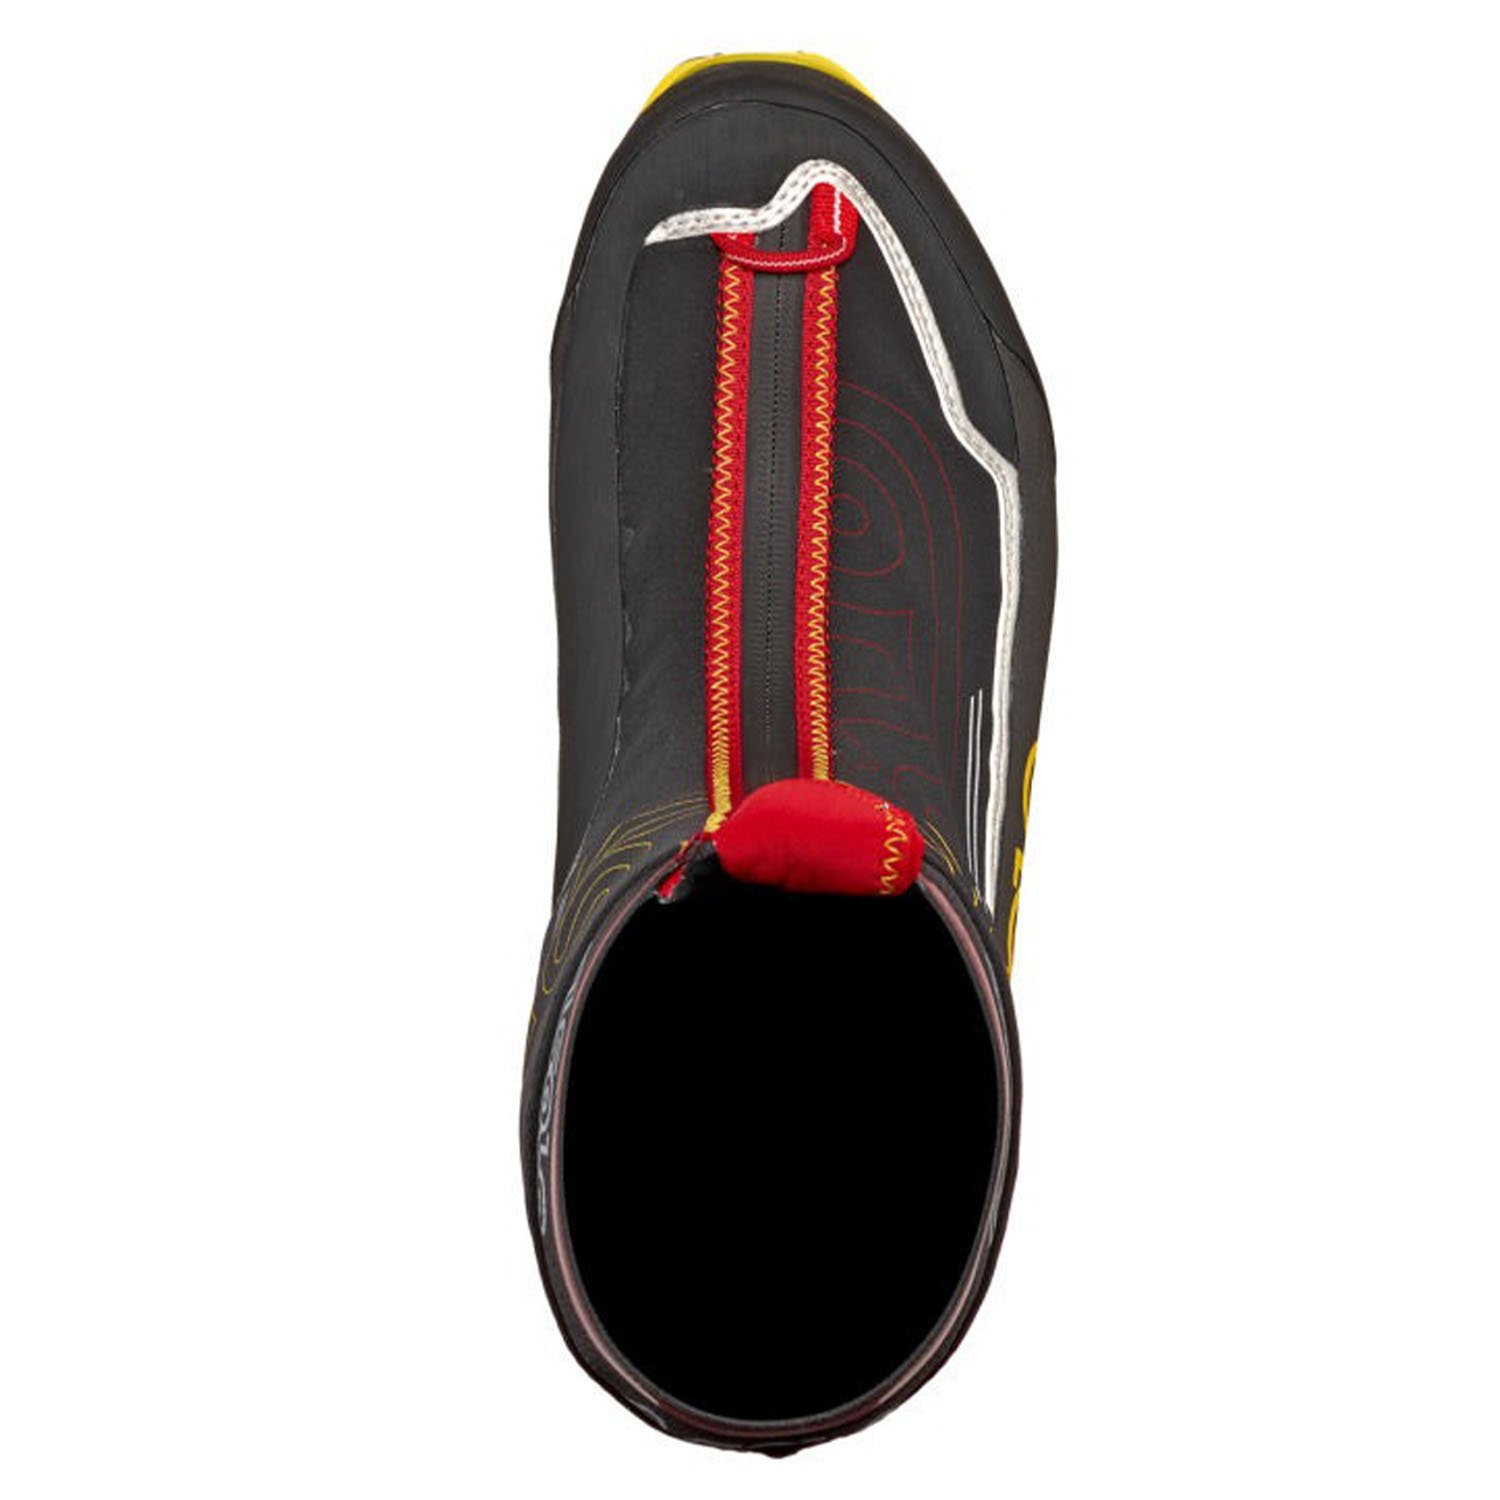 Ботинки Asolo Alpine Eiger XT Evo Gv Black/Red